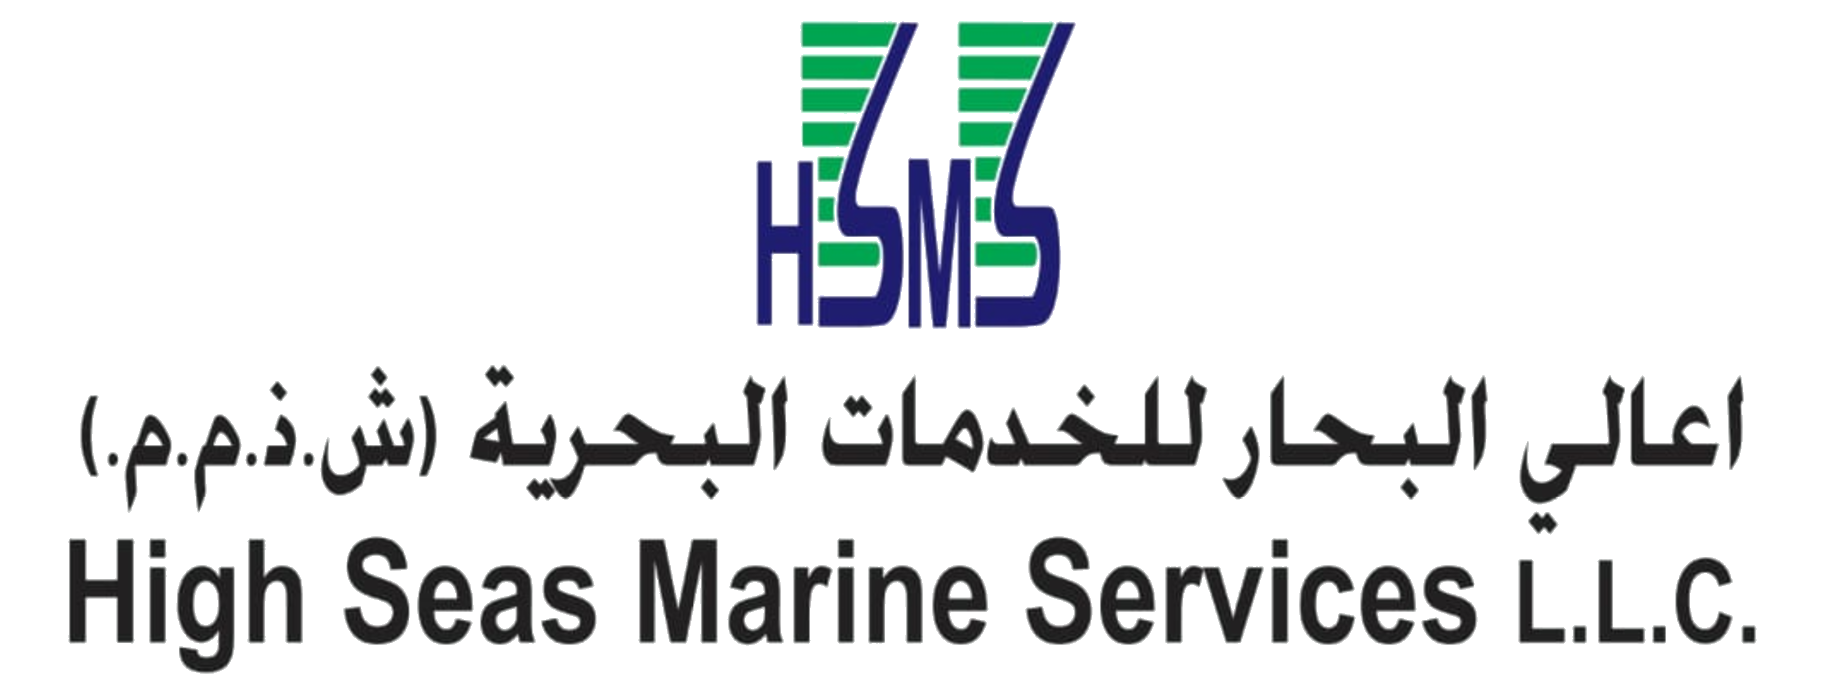 High Seas Marine Services LLC